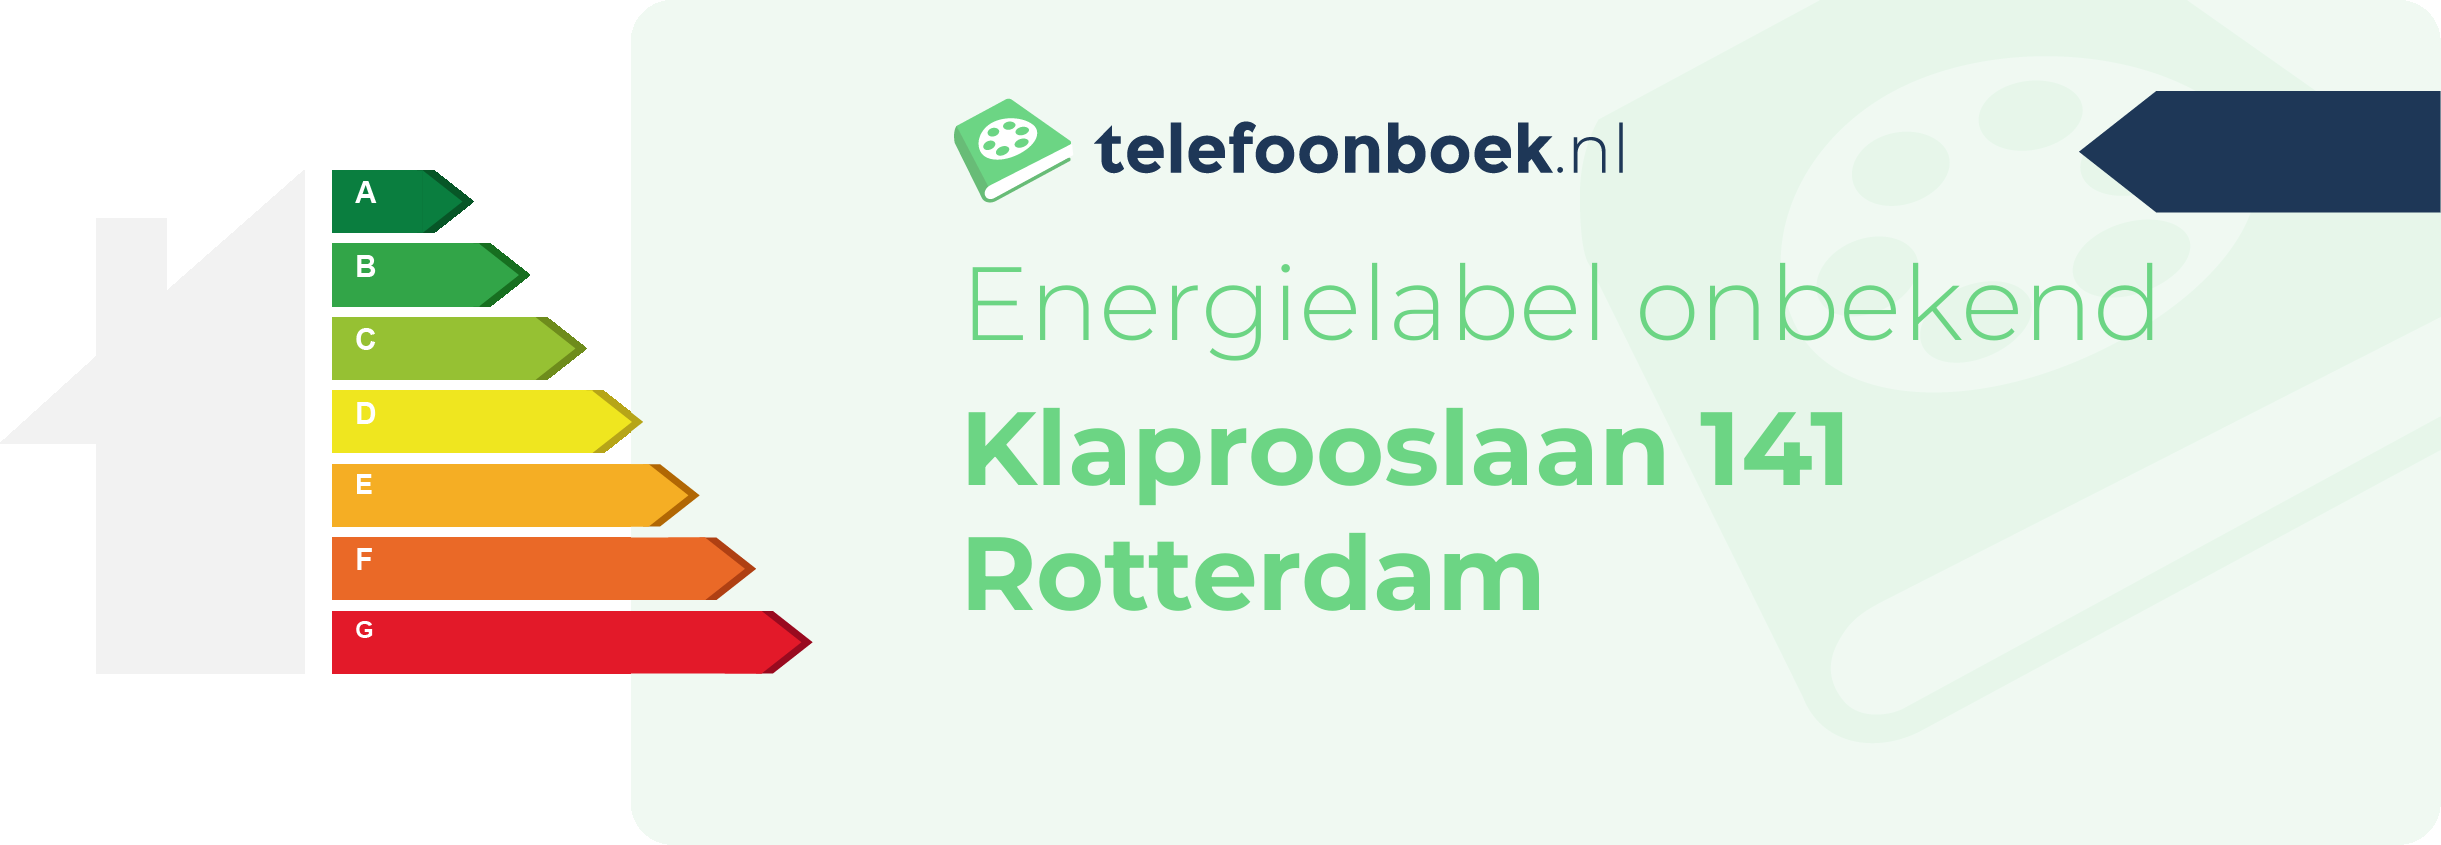 Energielabel Klaprooslaan 141 Rotterdam